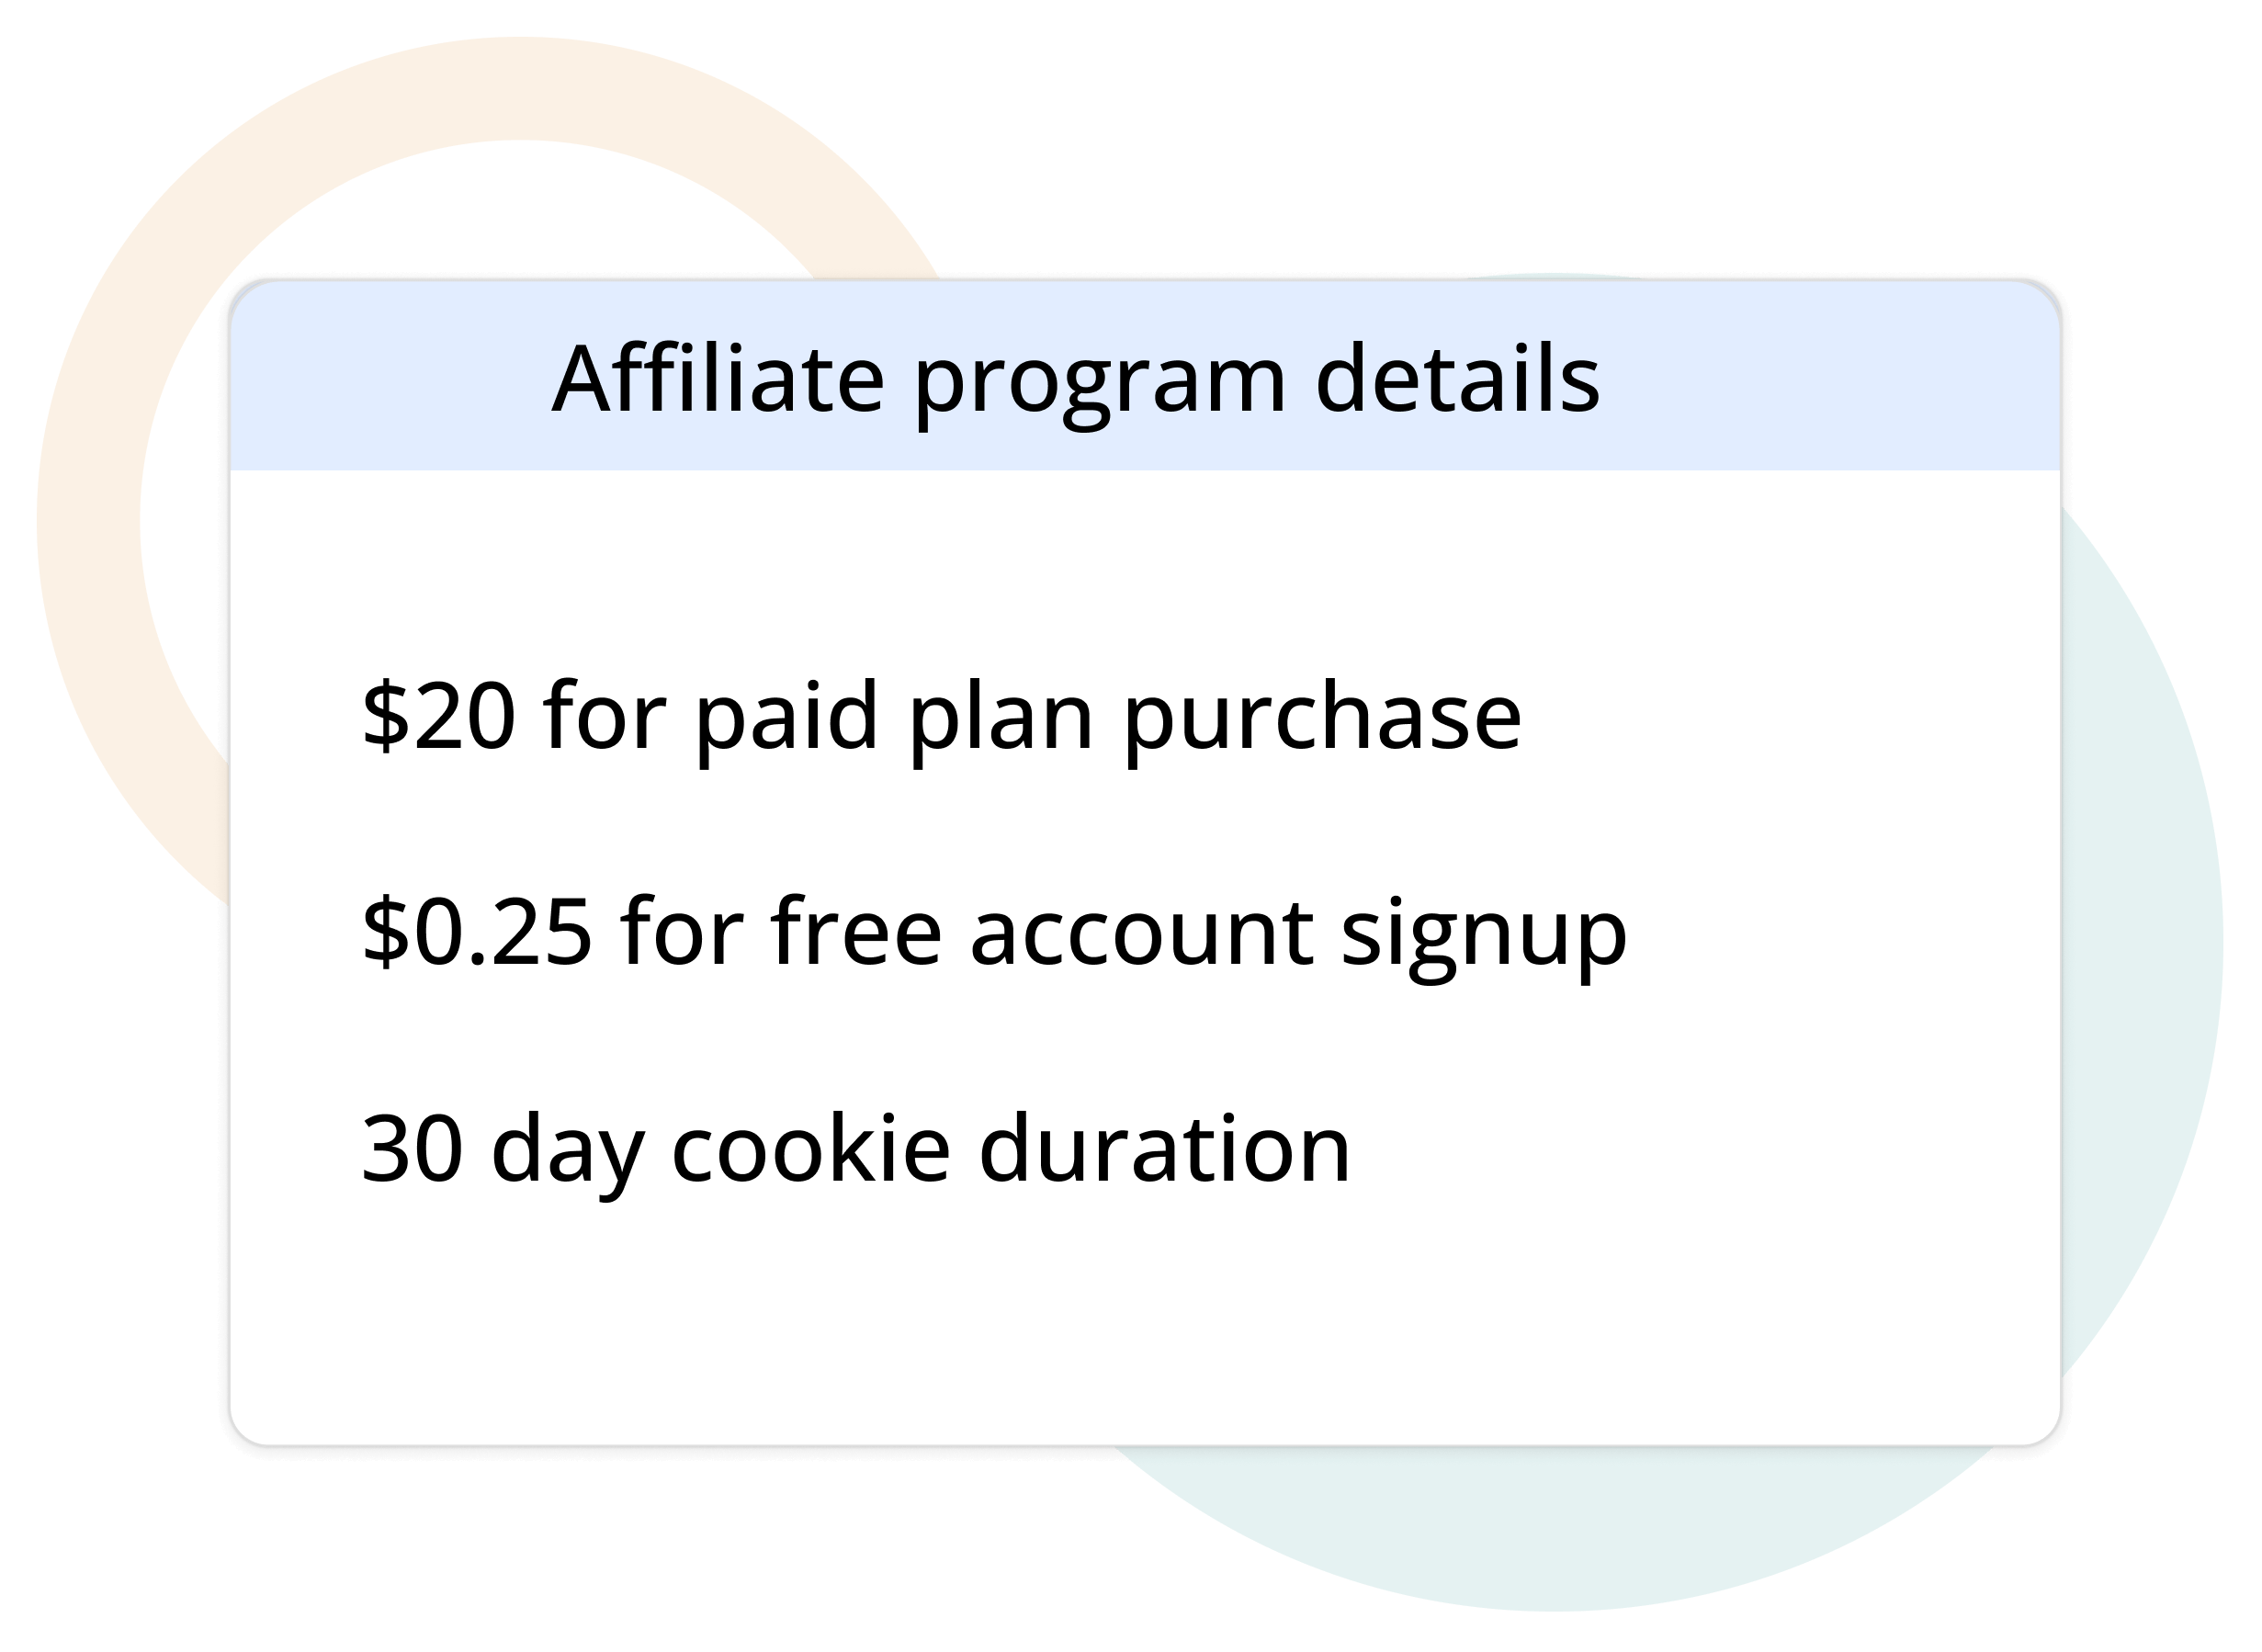 Affiliate program details